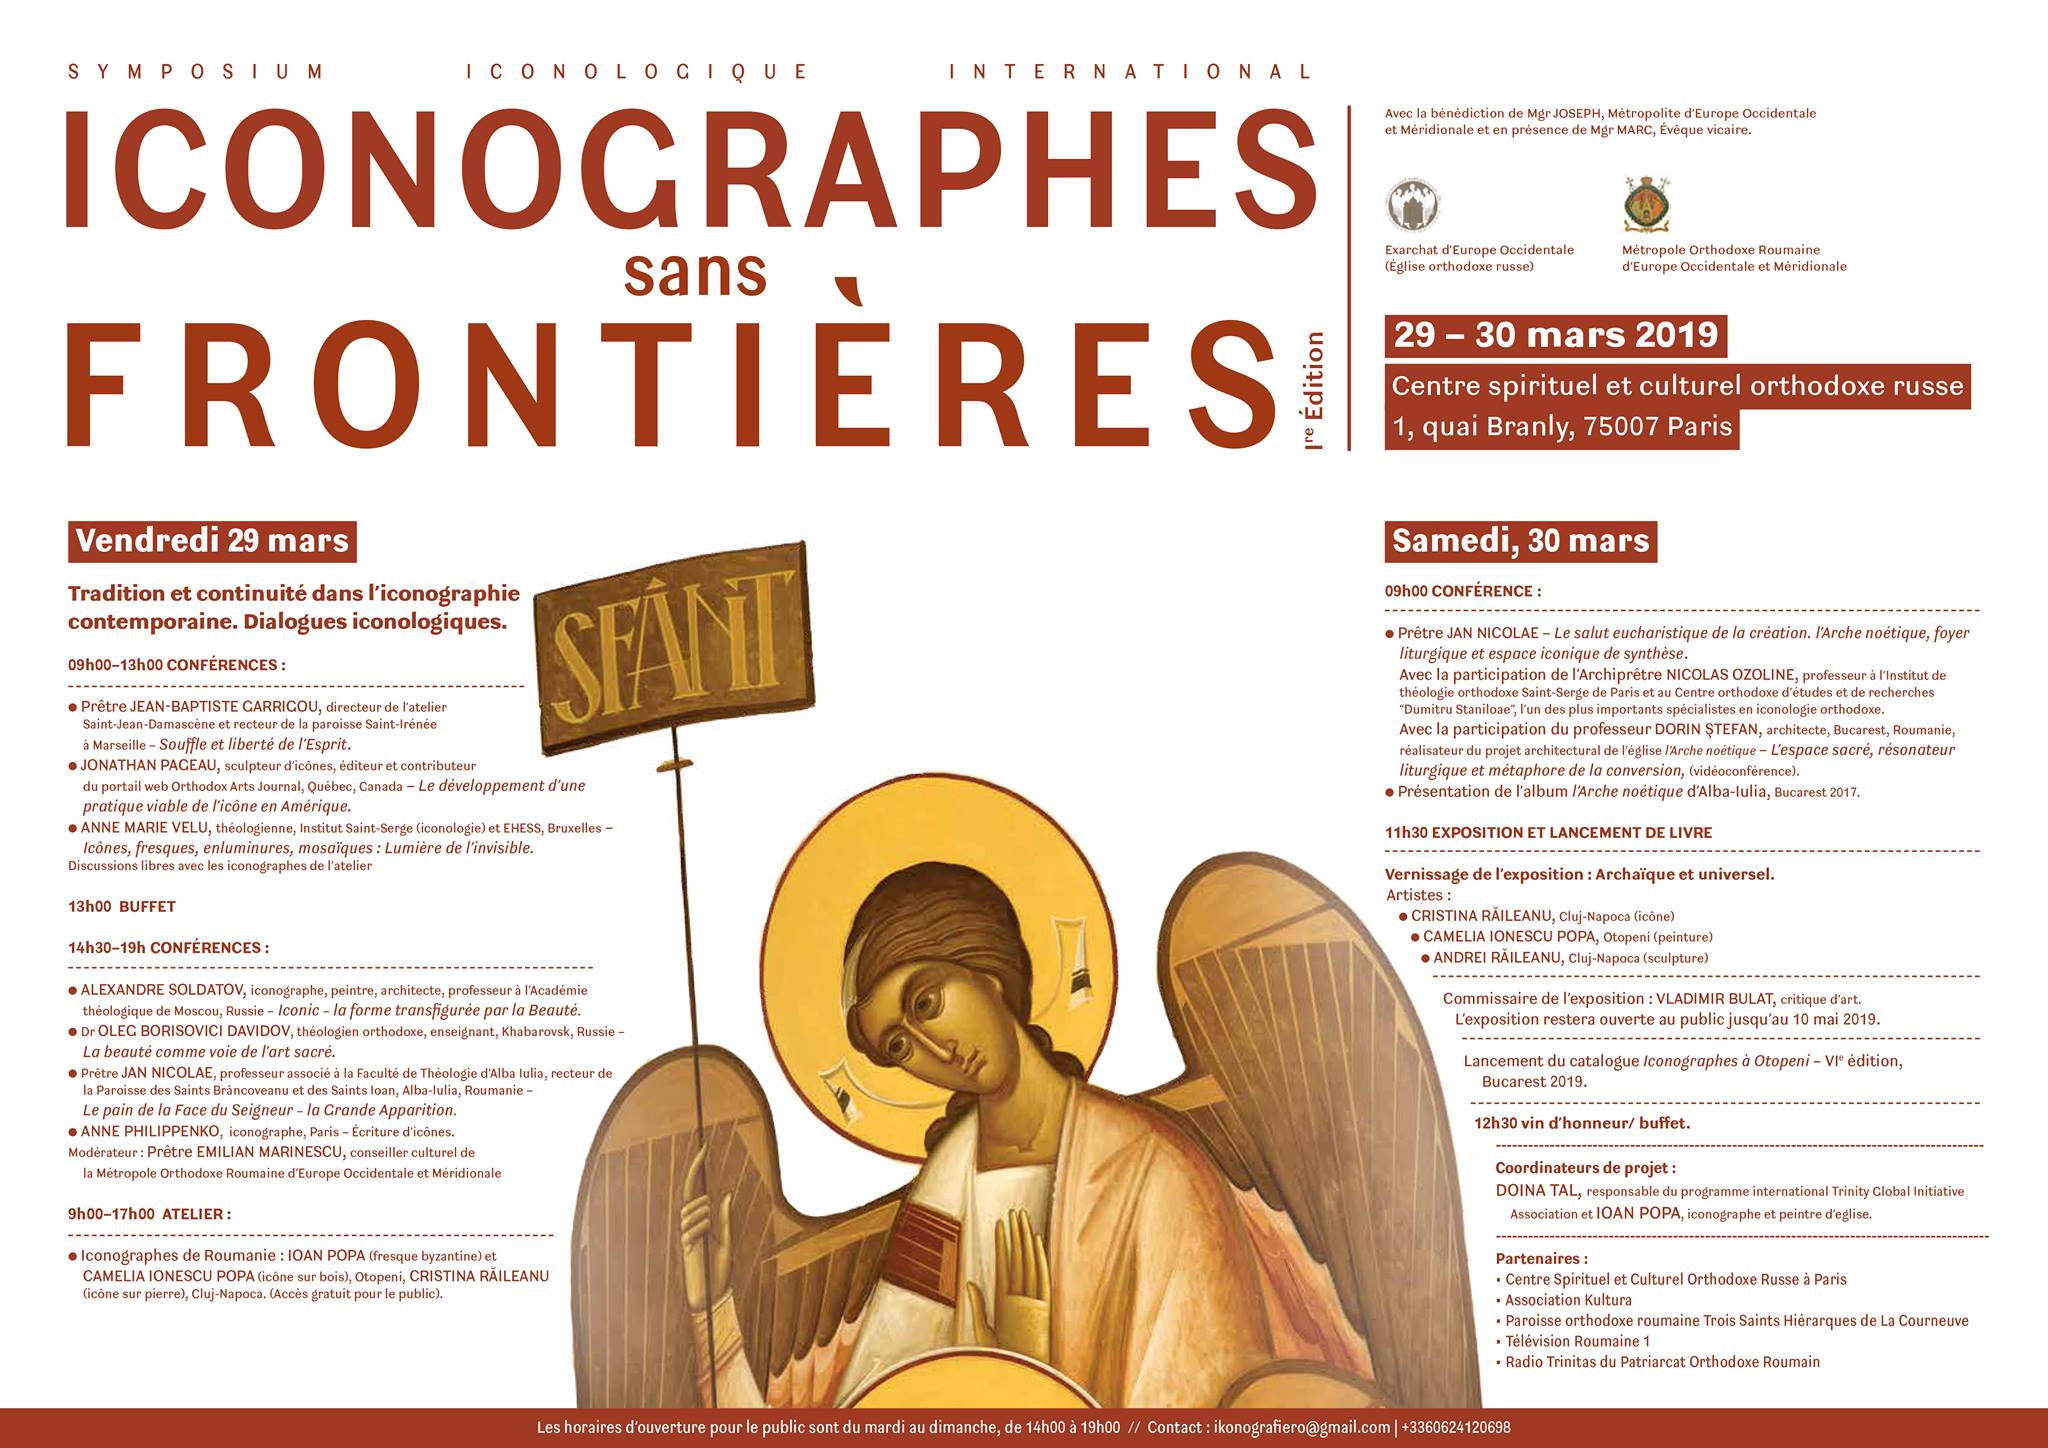 « Iconographes sans frontières »